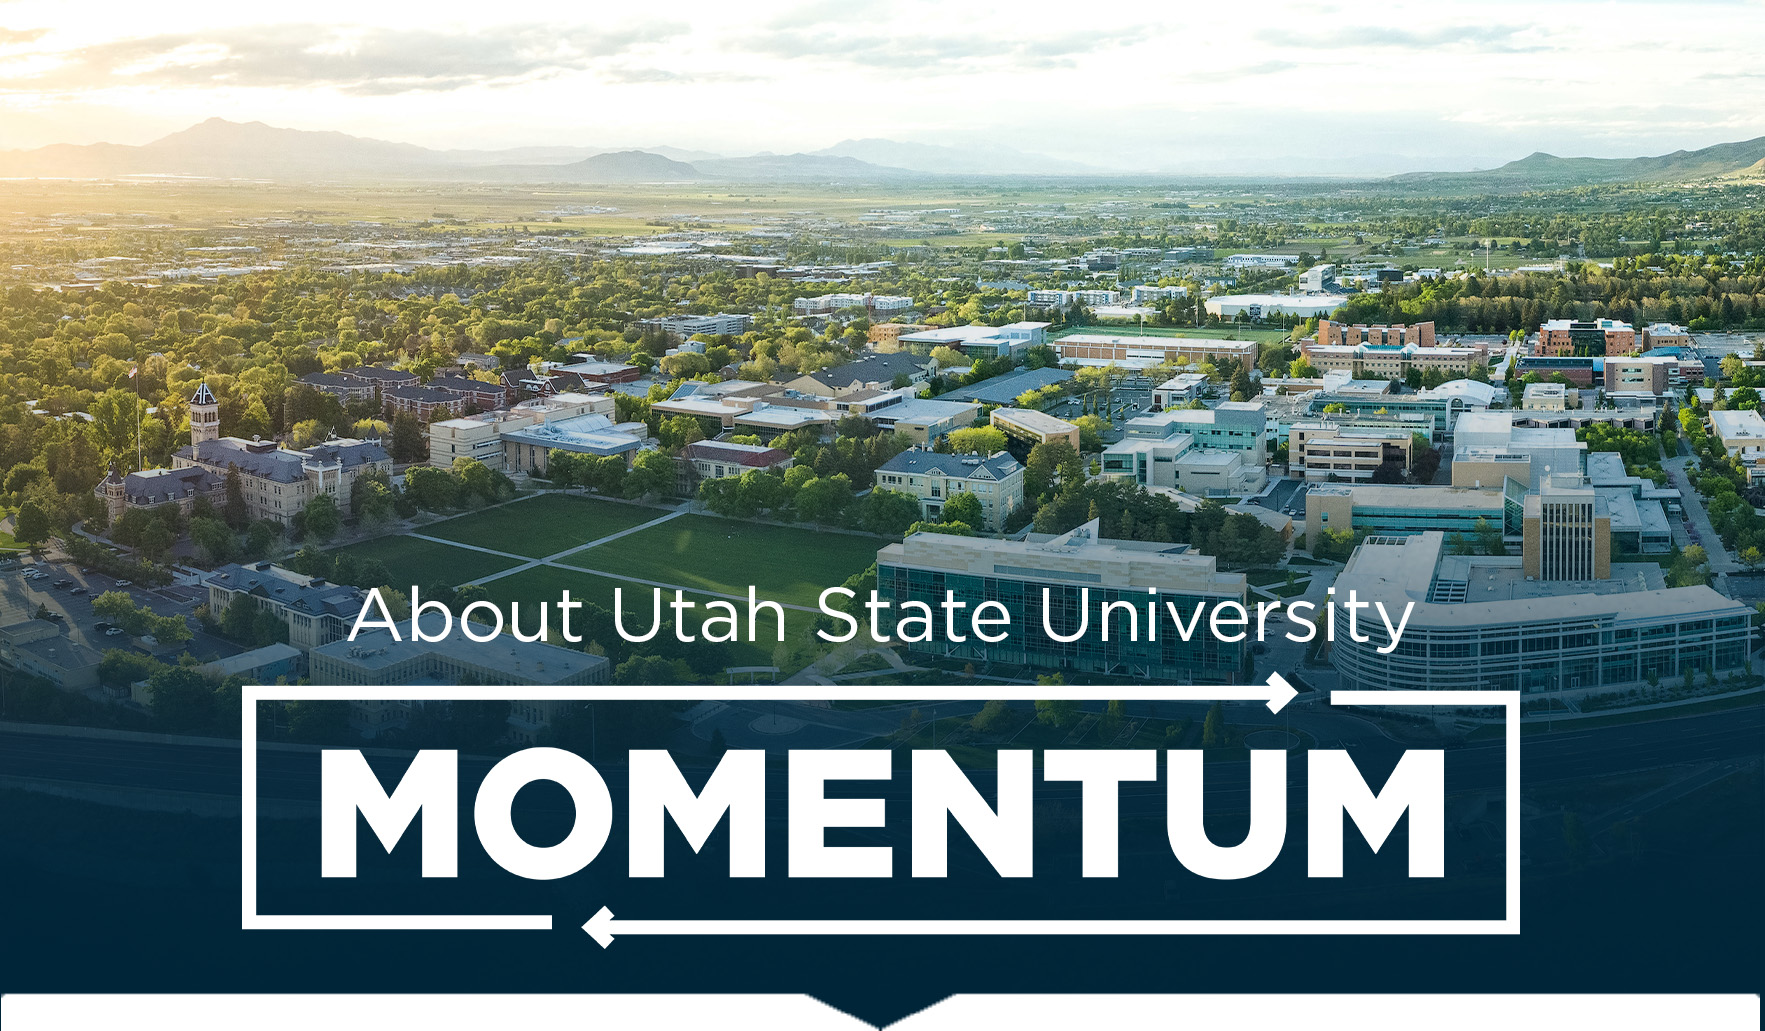 About Utah State University Momentum